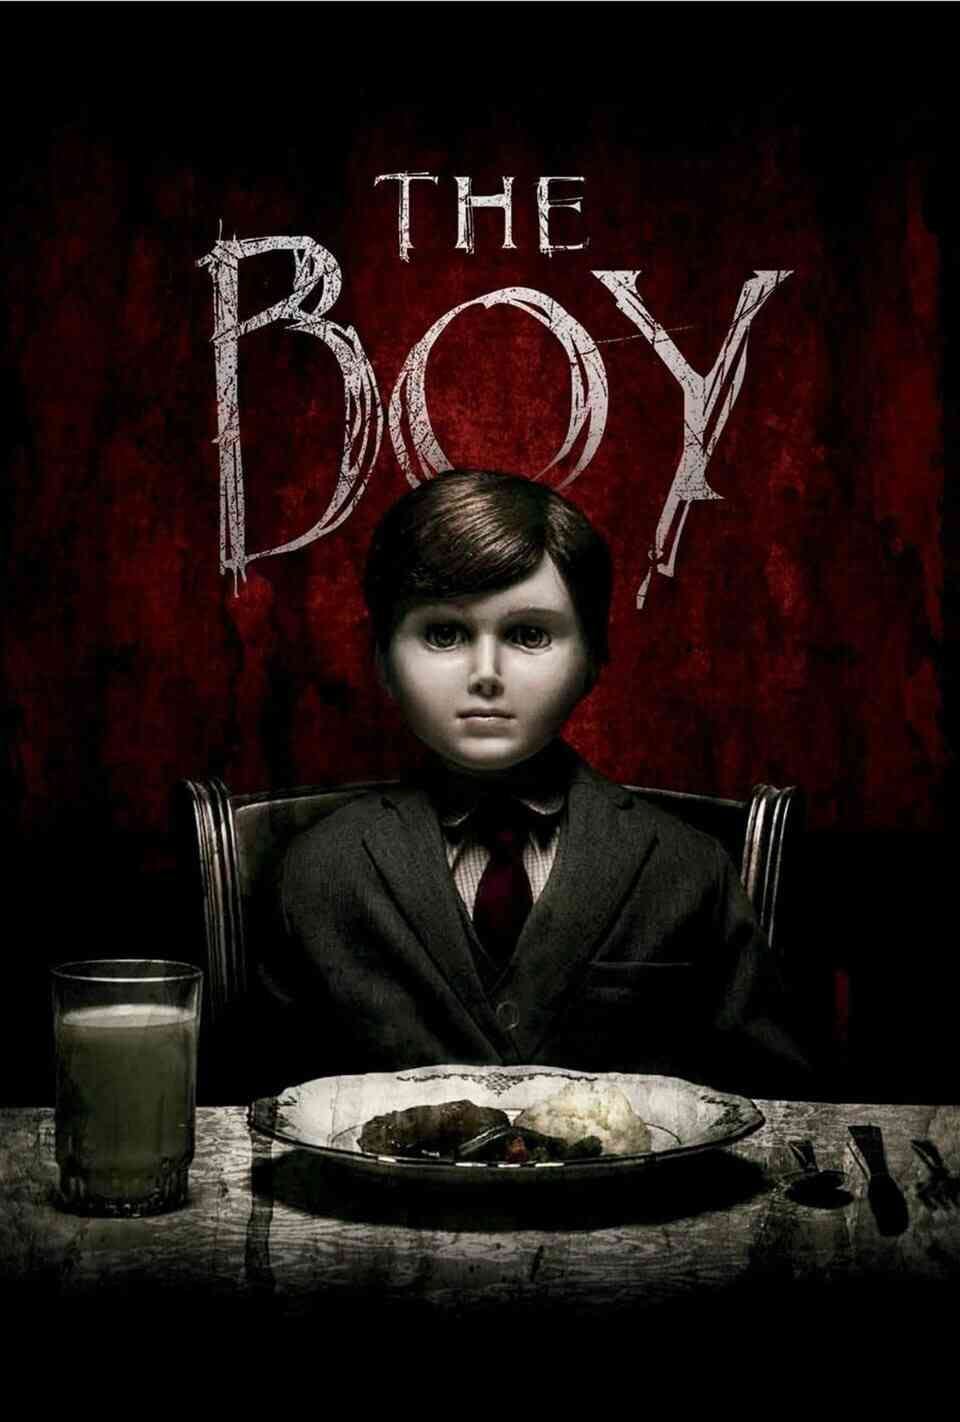 Read The Boy screenplay.